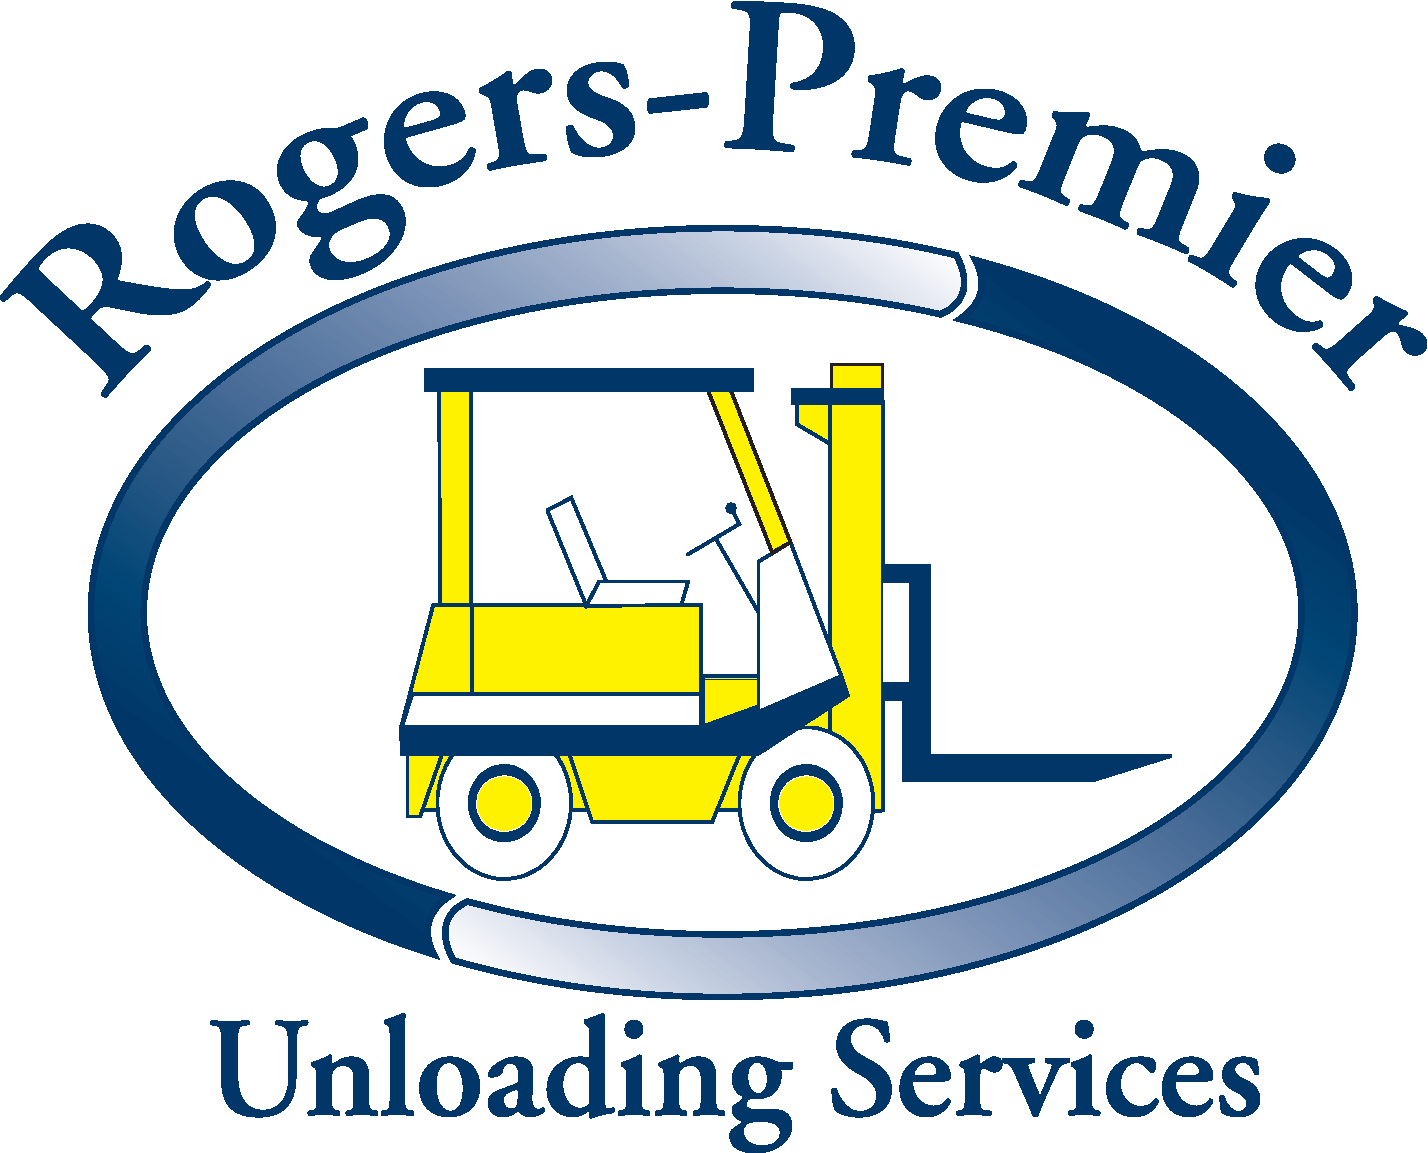 Rogers-Premier